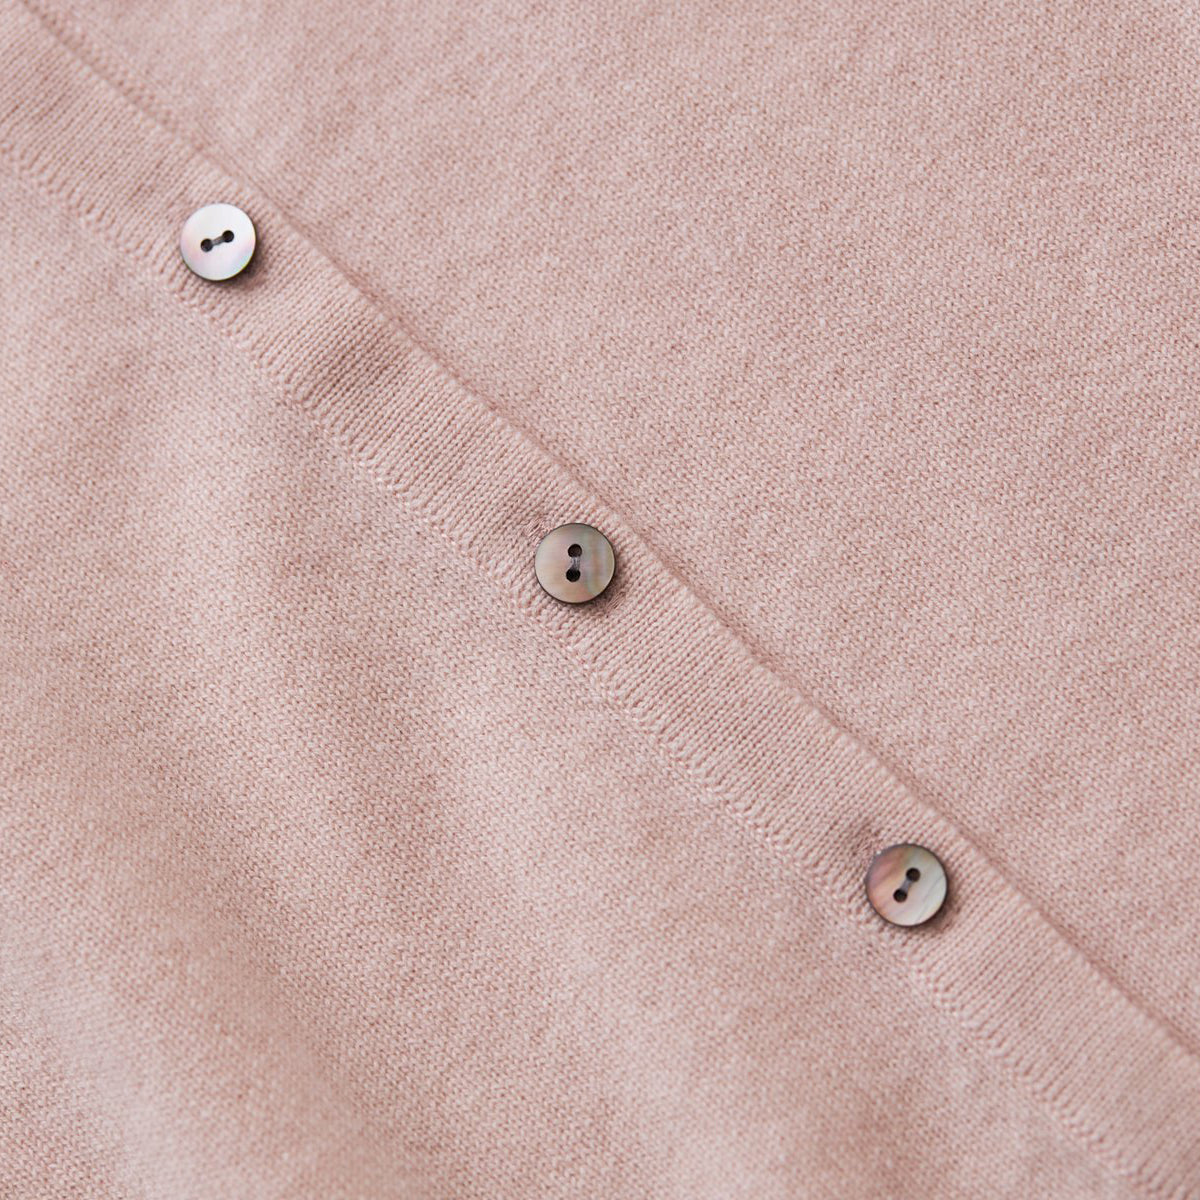 Personalized custom order of women's Japanese luxury cashmere knit crew-neck cardigan